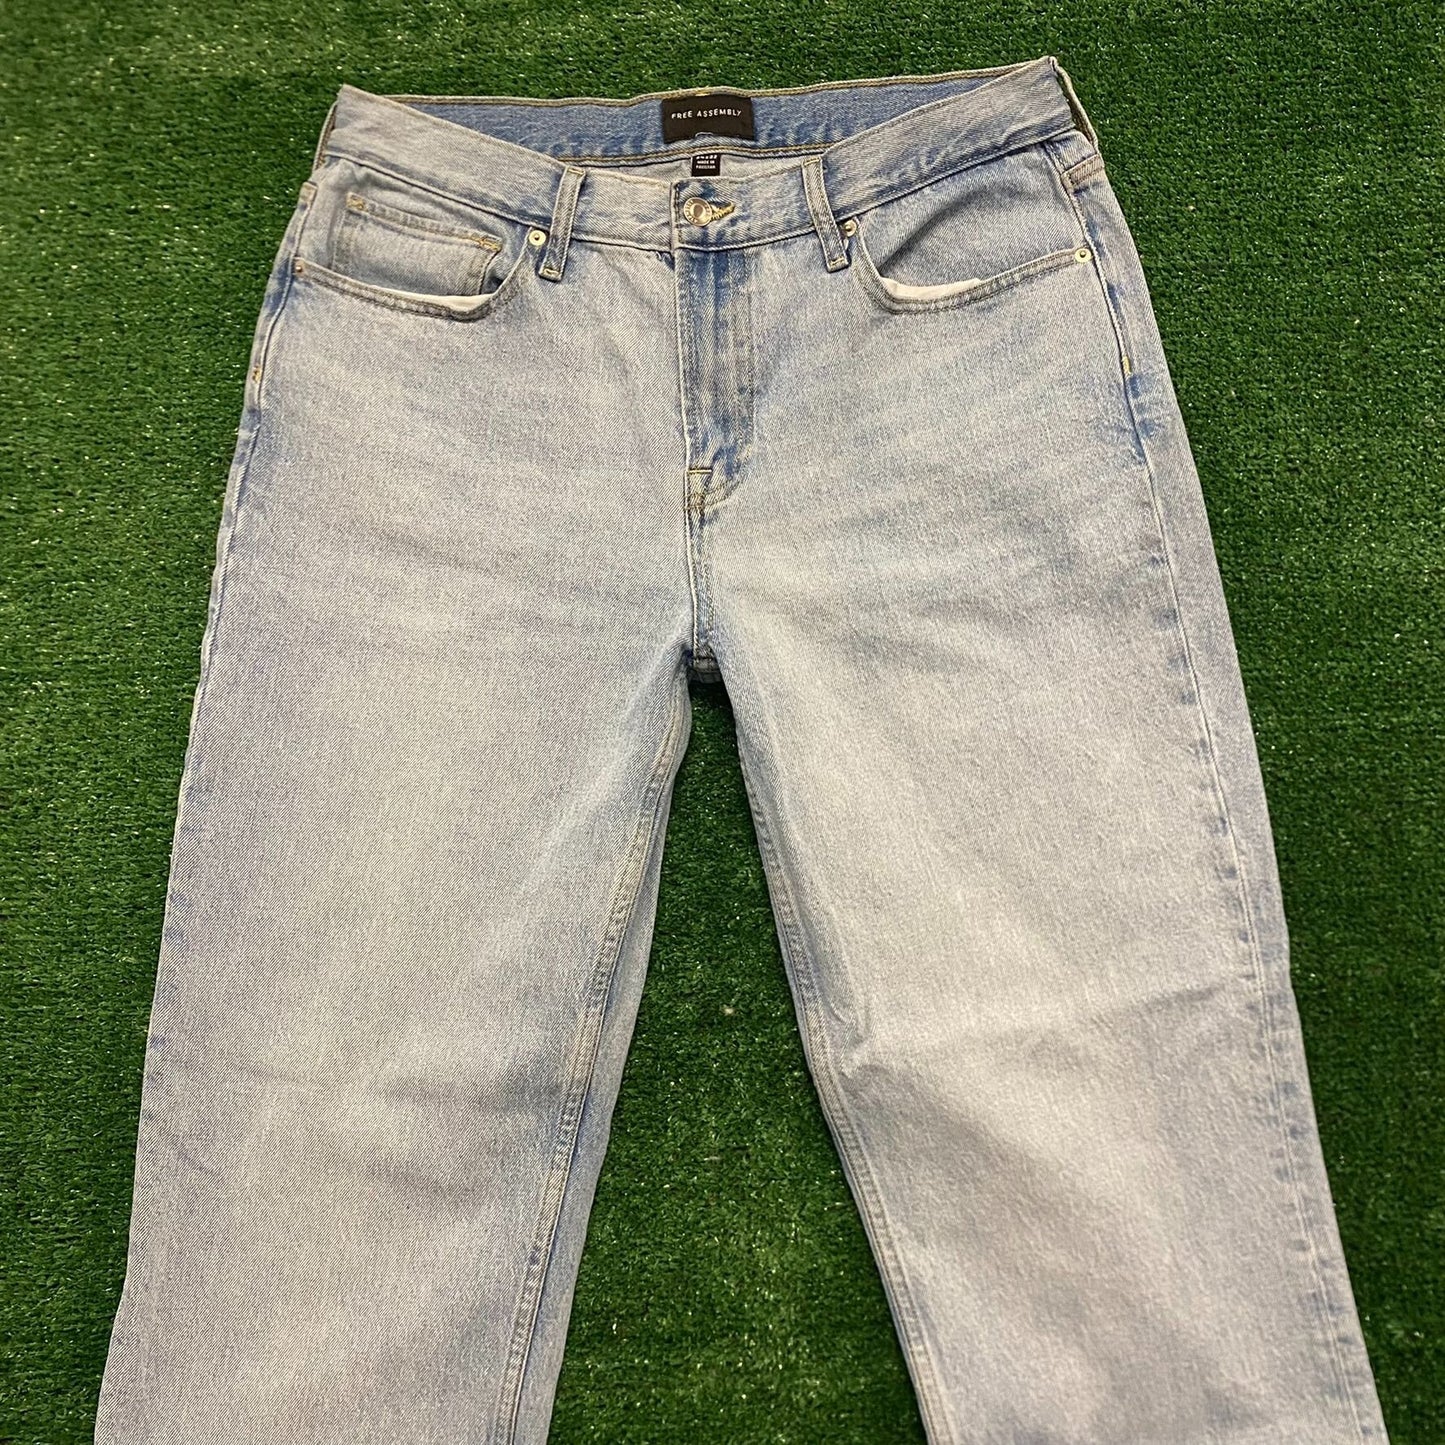 Stonewashed Faded Vintage Denim Jeans Pants